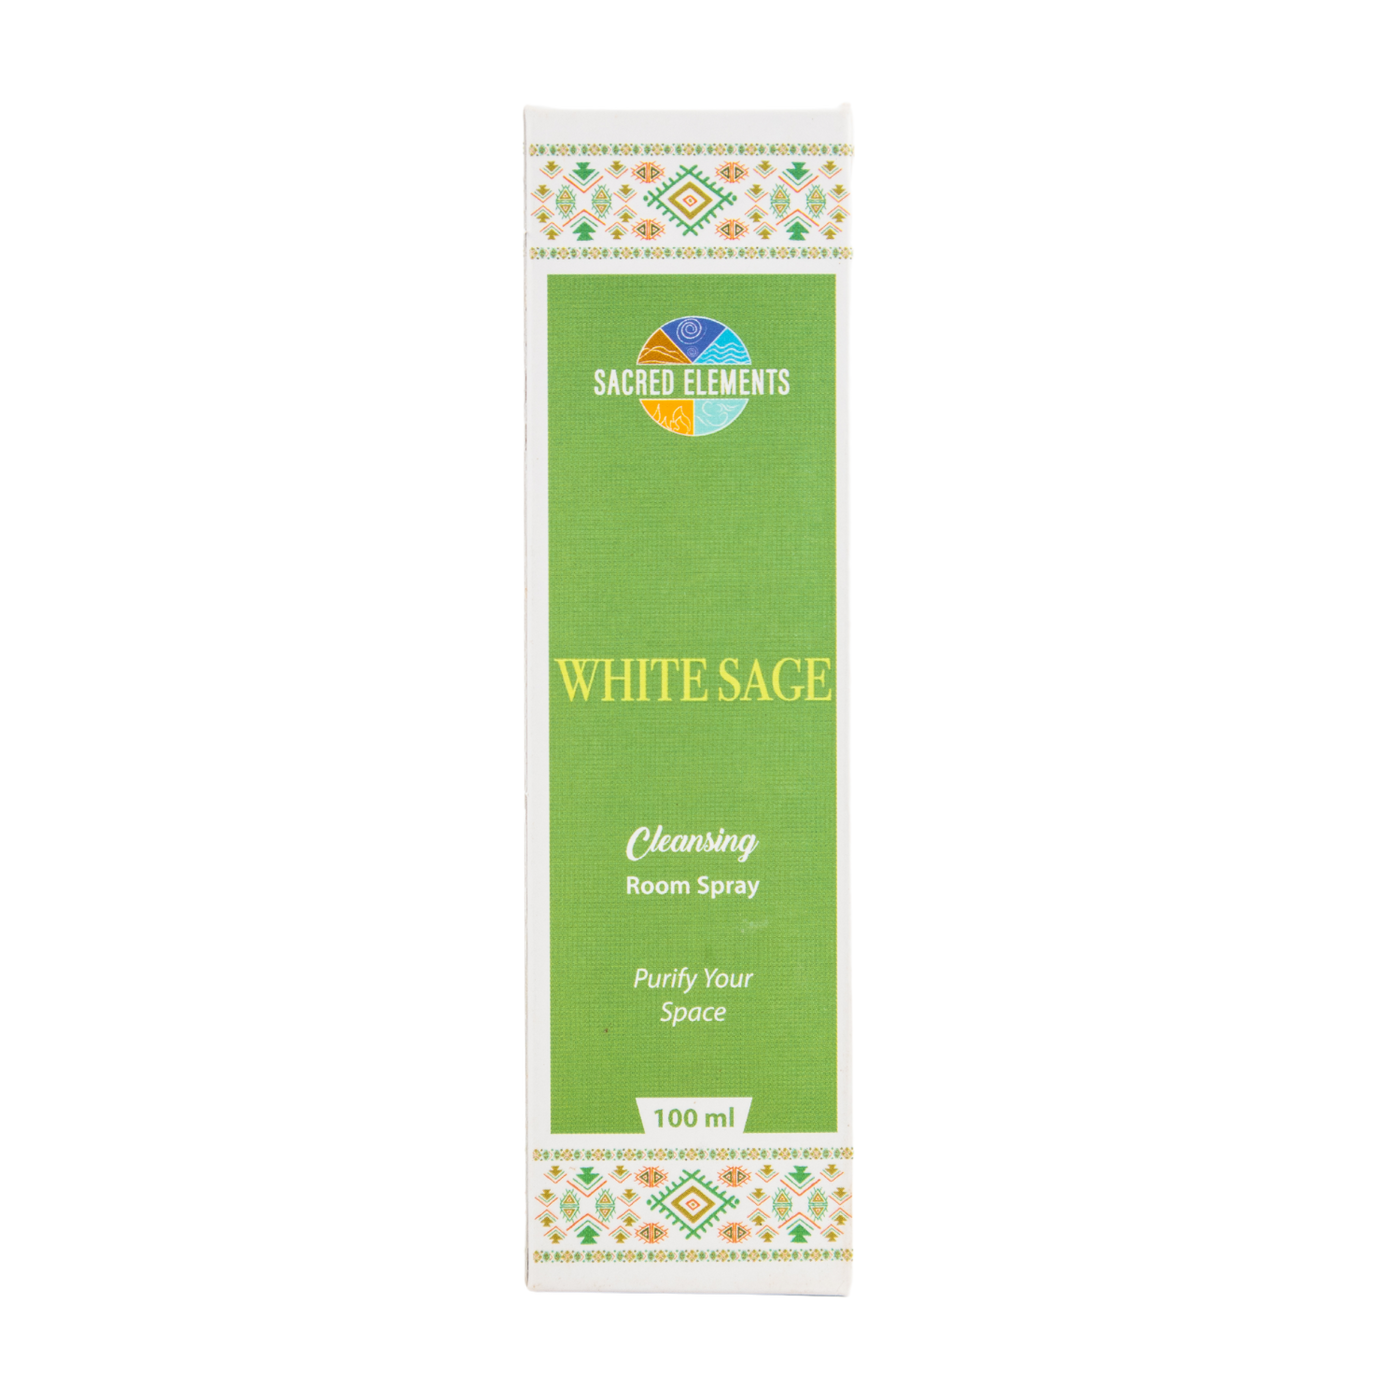 White Sage Clearing Spray